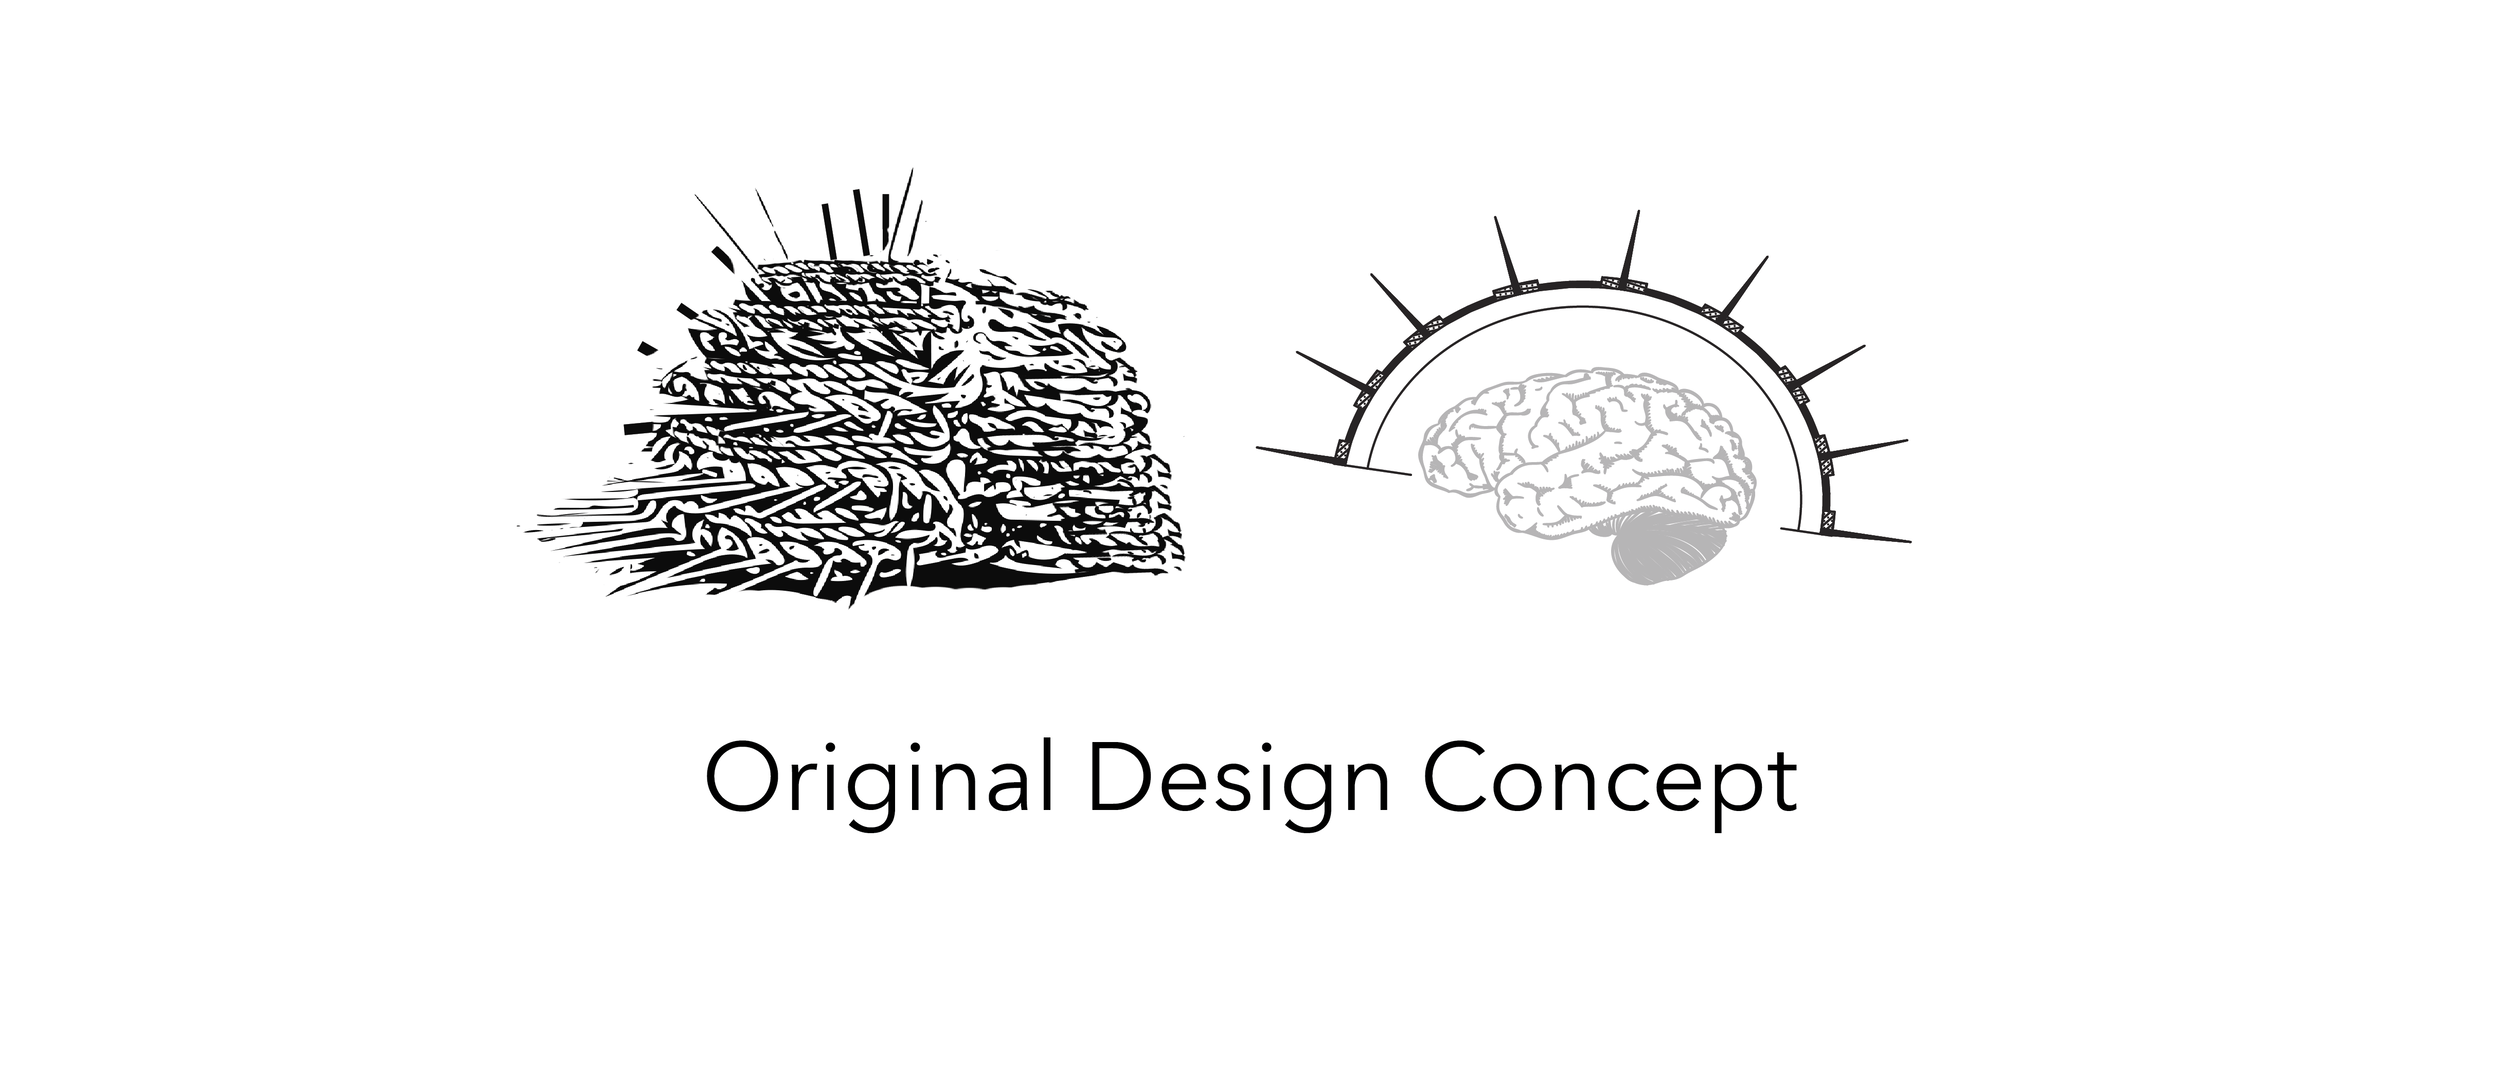 original design concept b&w.png